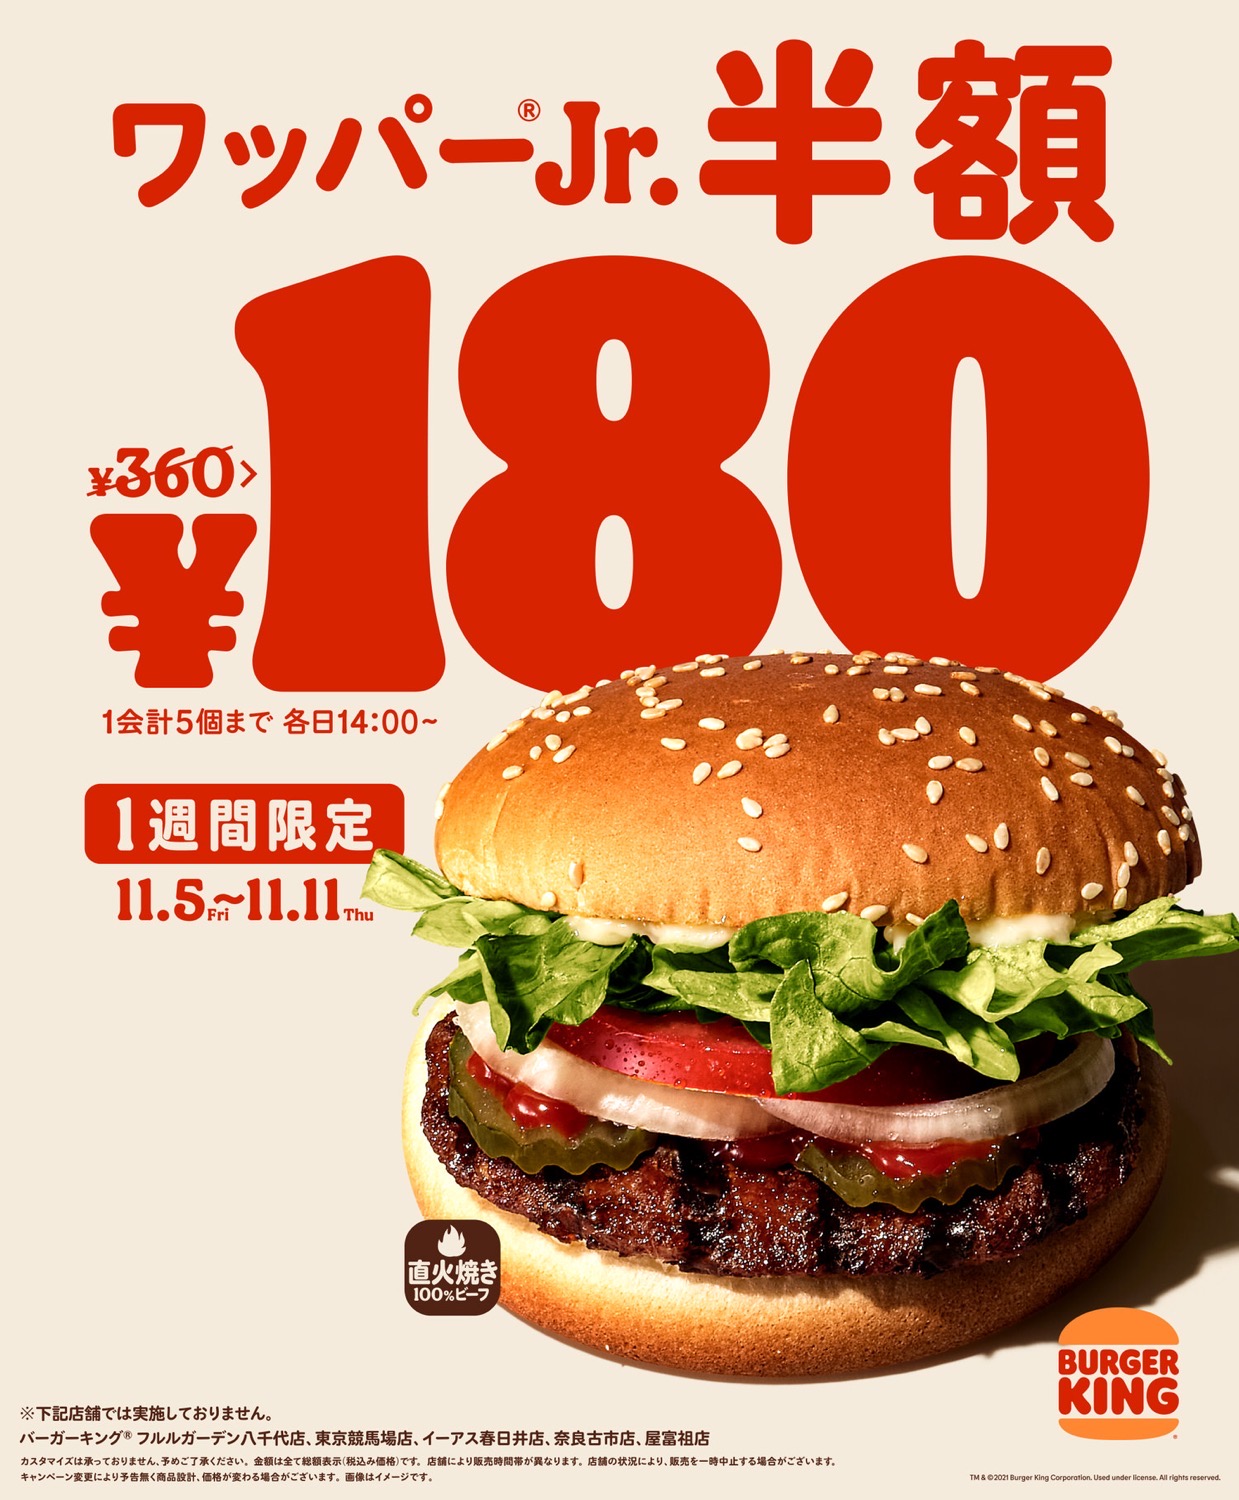 Burger king whopper jr 07000